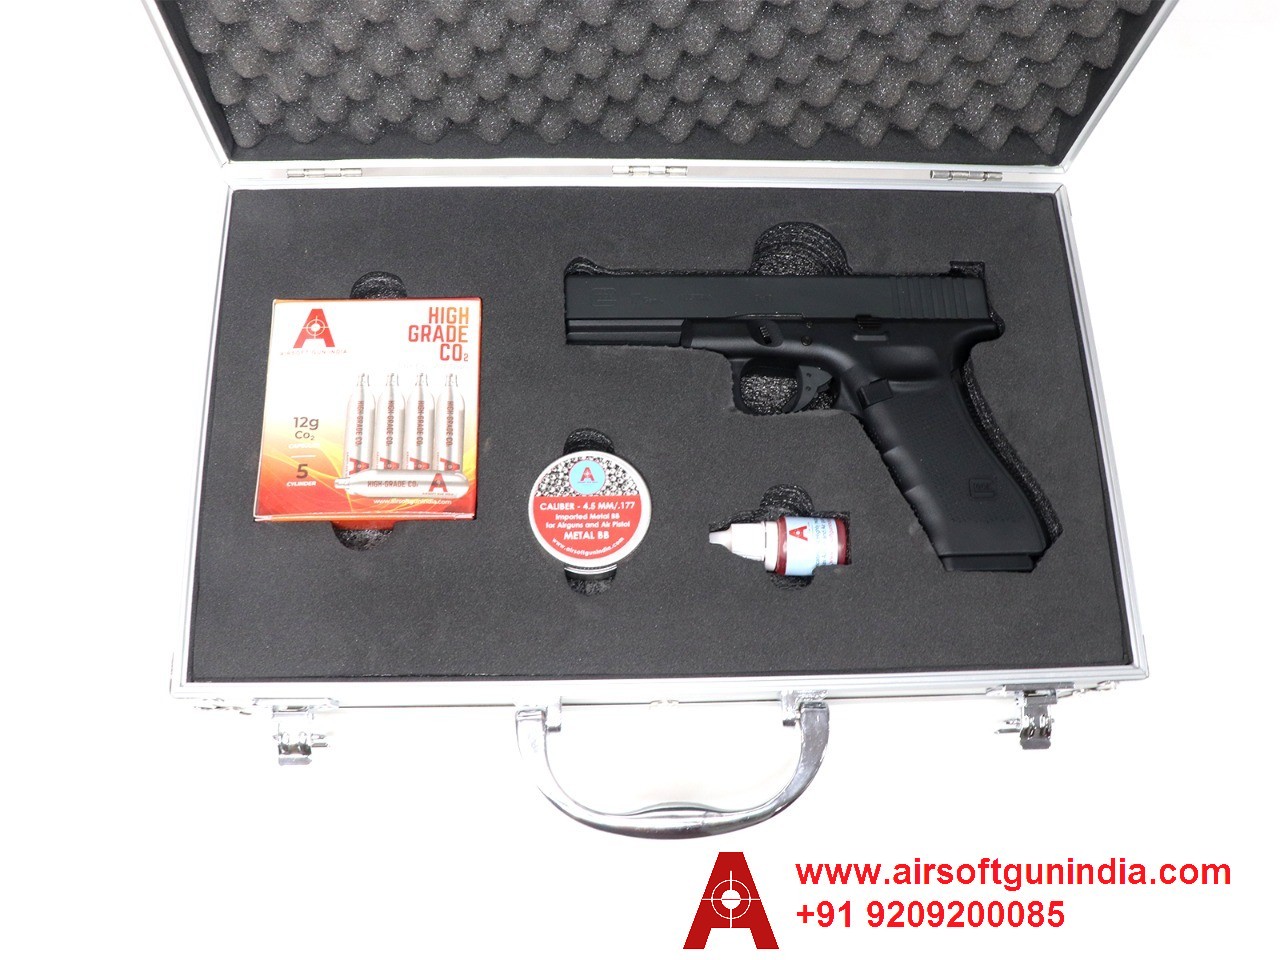 Customized Case For Umarex Glock 17 4.5mm Gen 4 Co2 BB Air Pistol By Airsoft Gun India